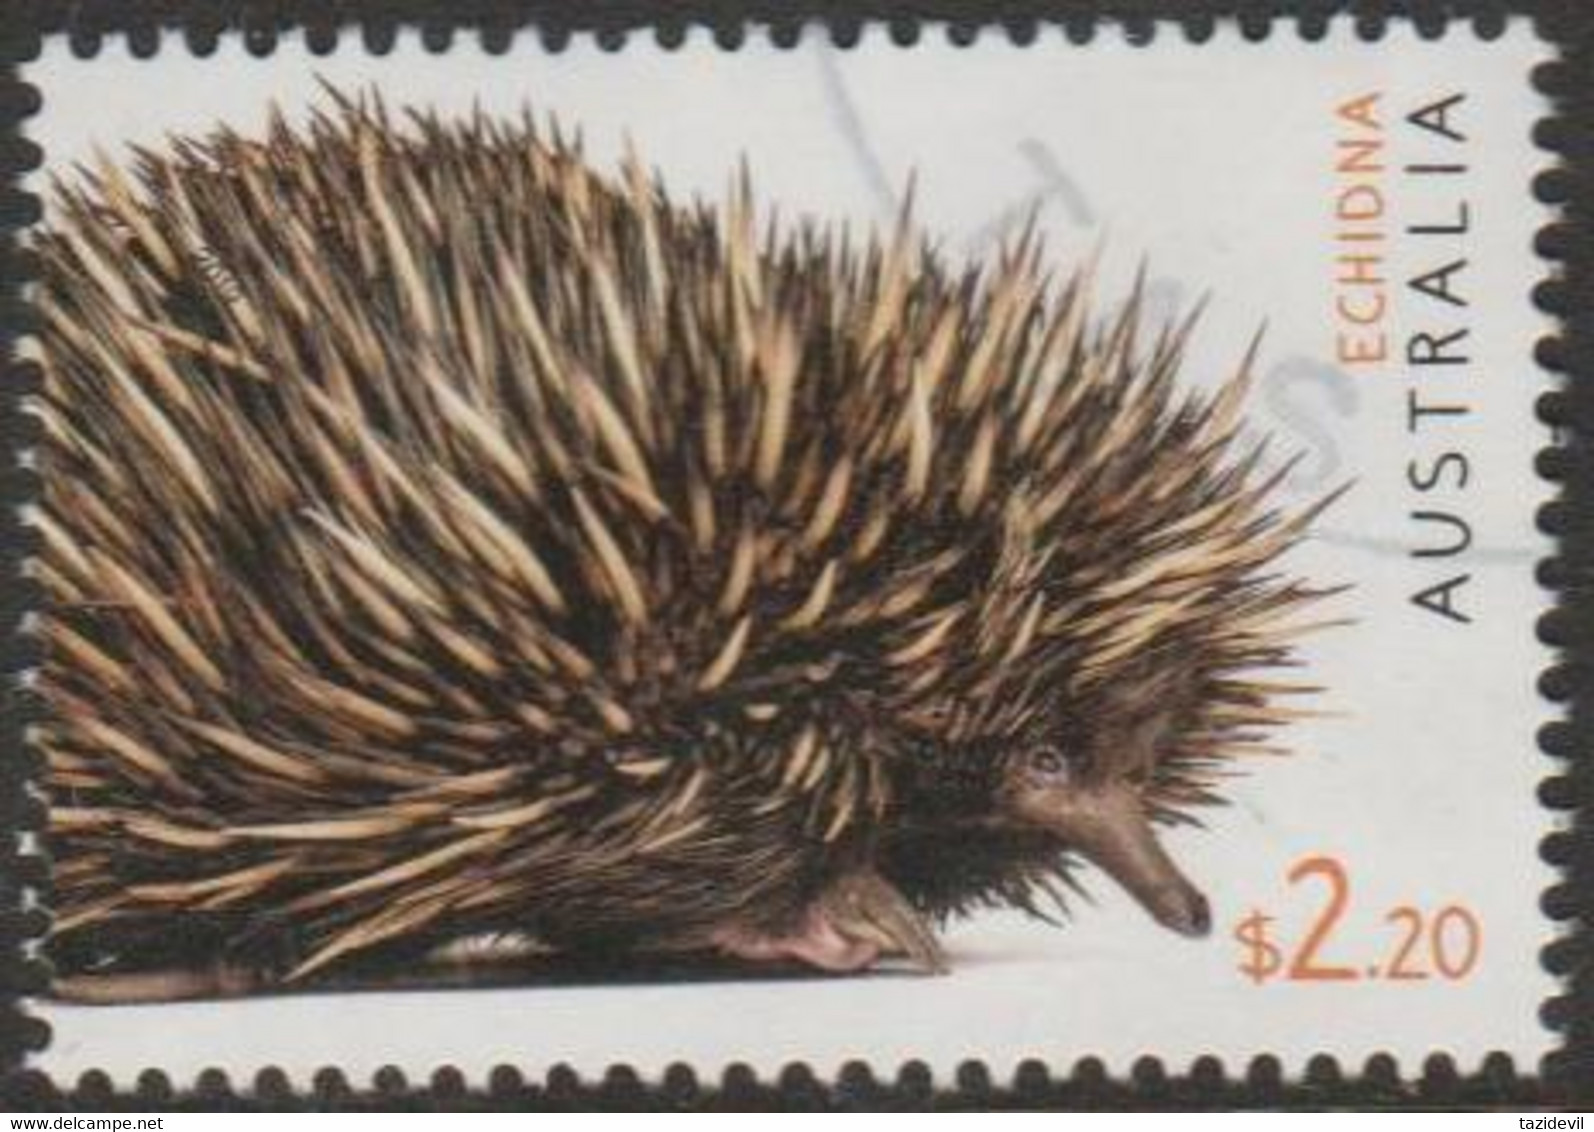 AUSTRALIA - USED 2019 $2.20 Australian Fauna - Echidna - Used Stamps